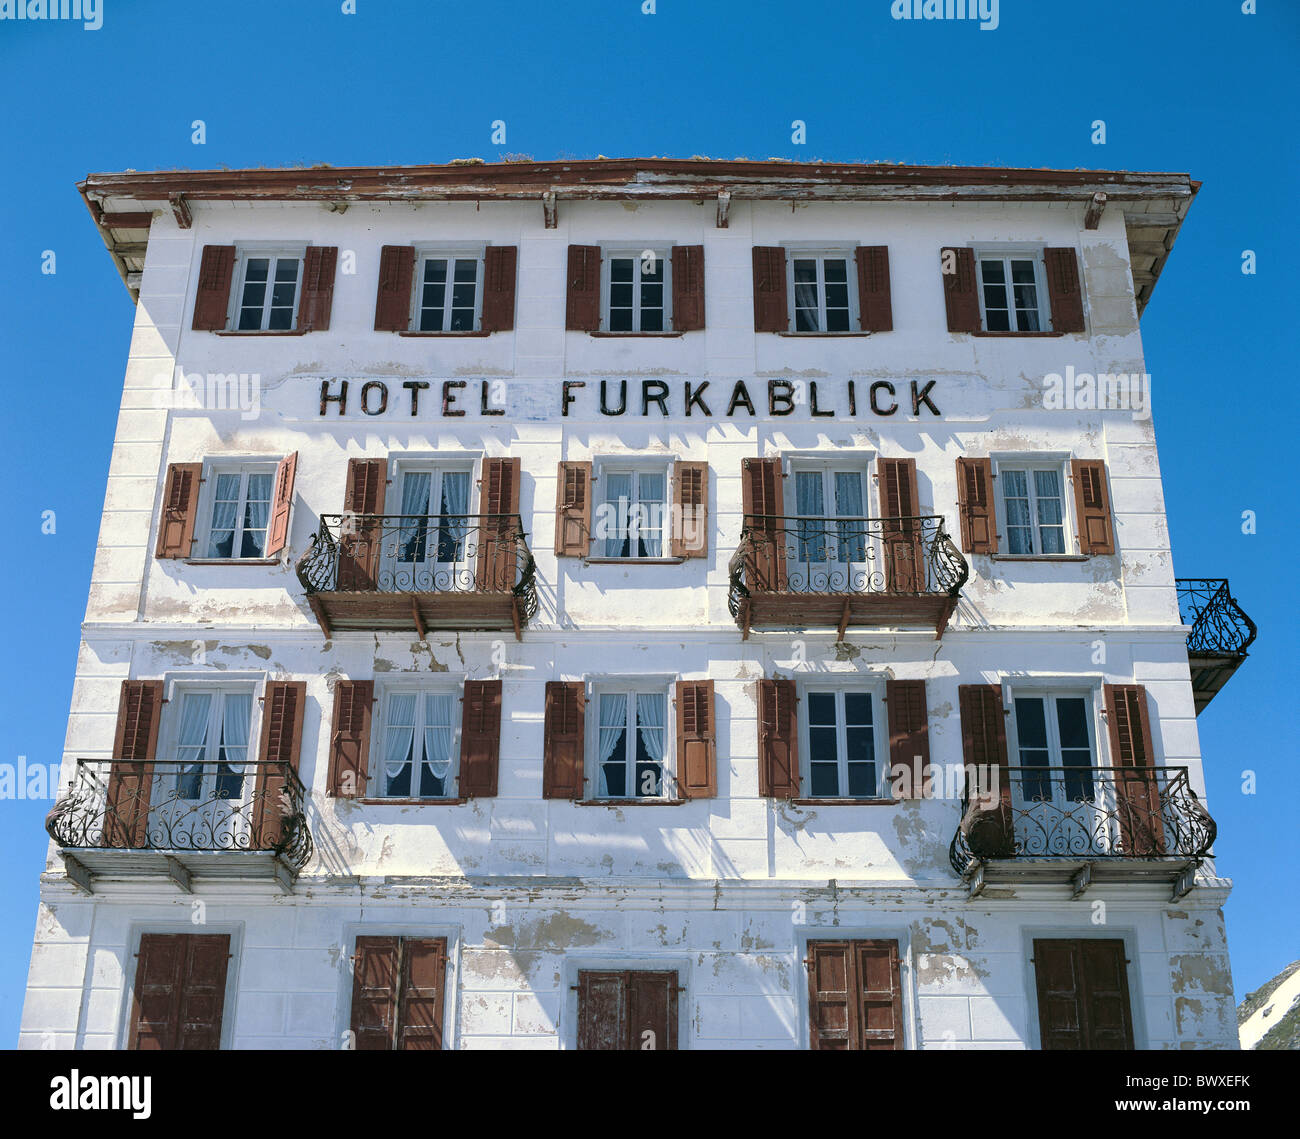 hotel Furkablick Furka Pass Switzerland Europe house facade Furka building construction Alps Stock Photo